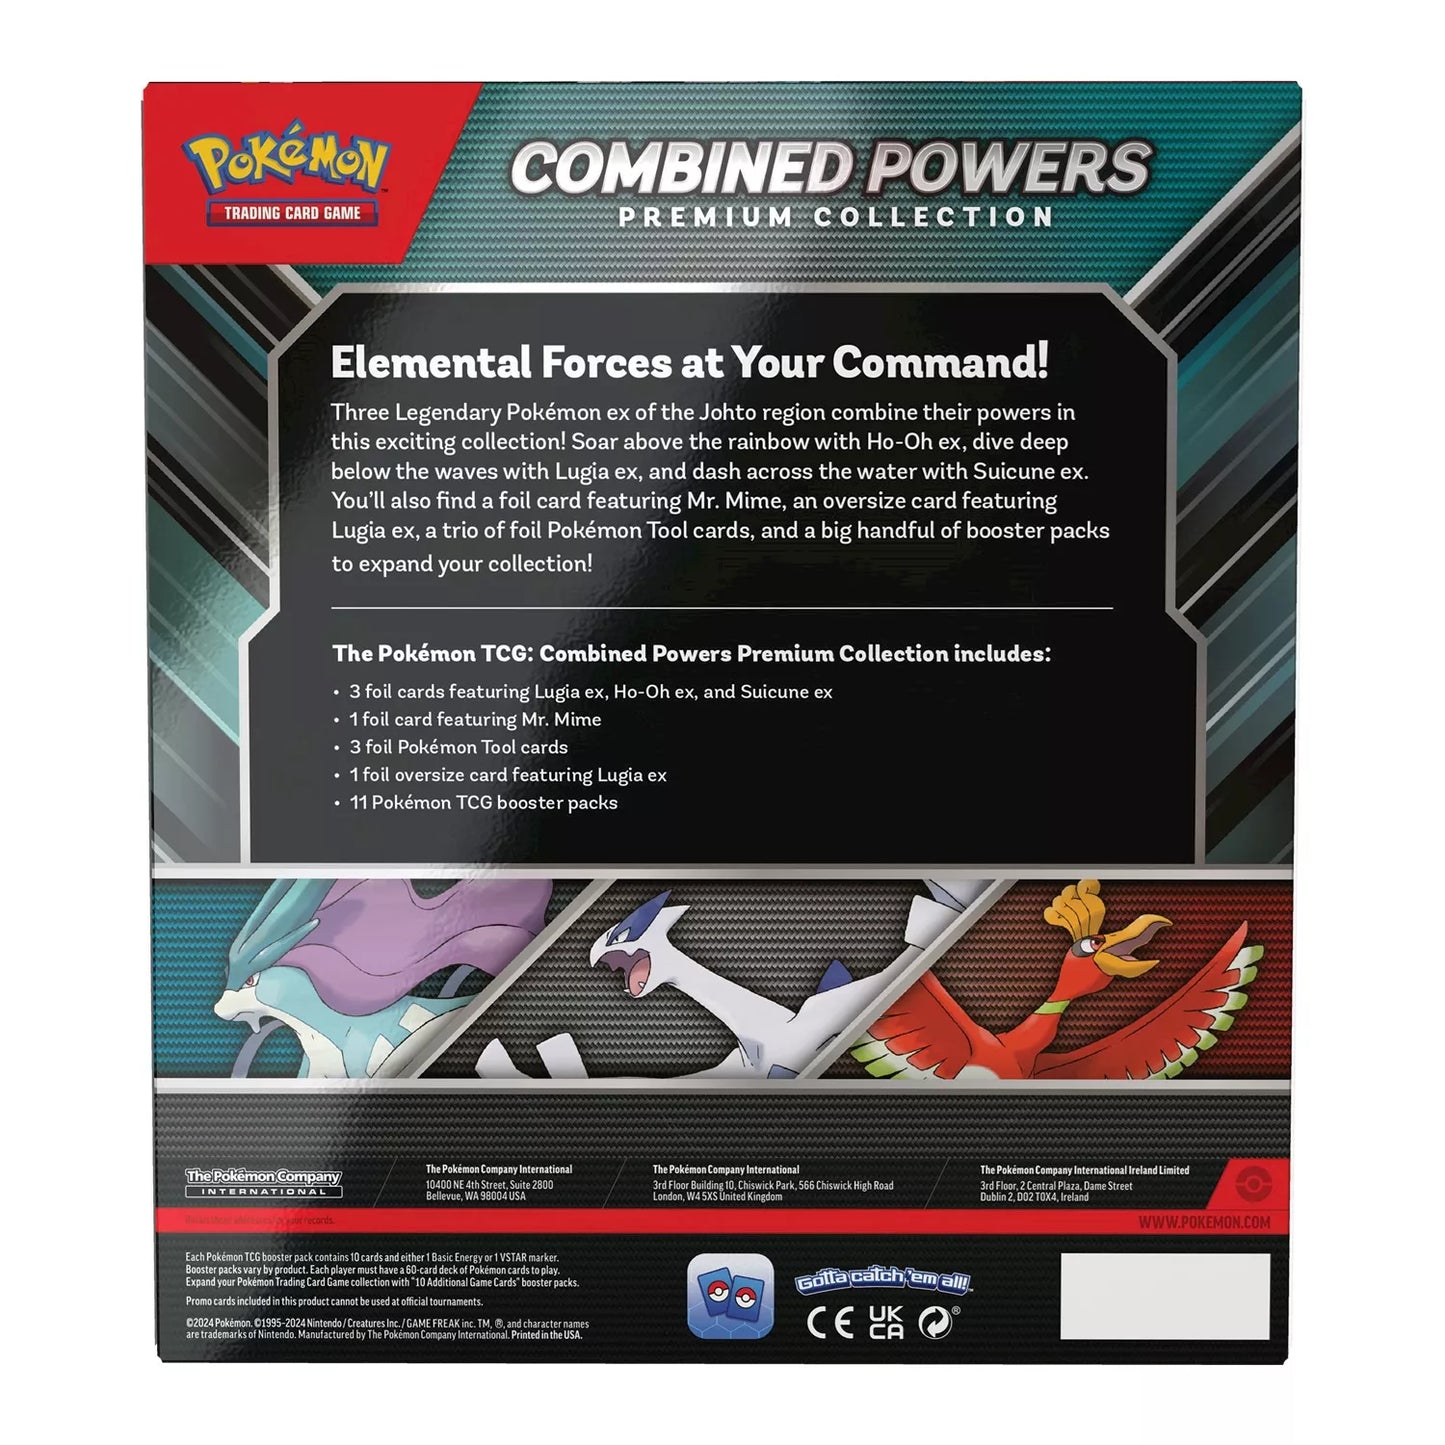 Combined Powers - Premium Collection (EN)